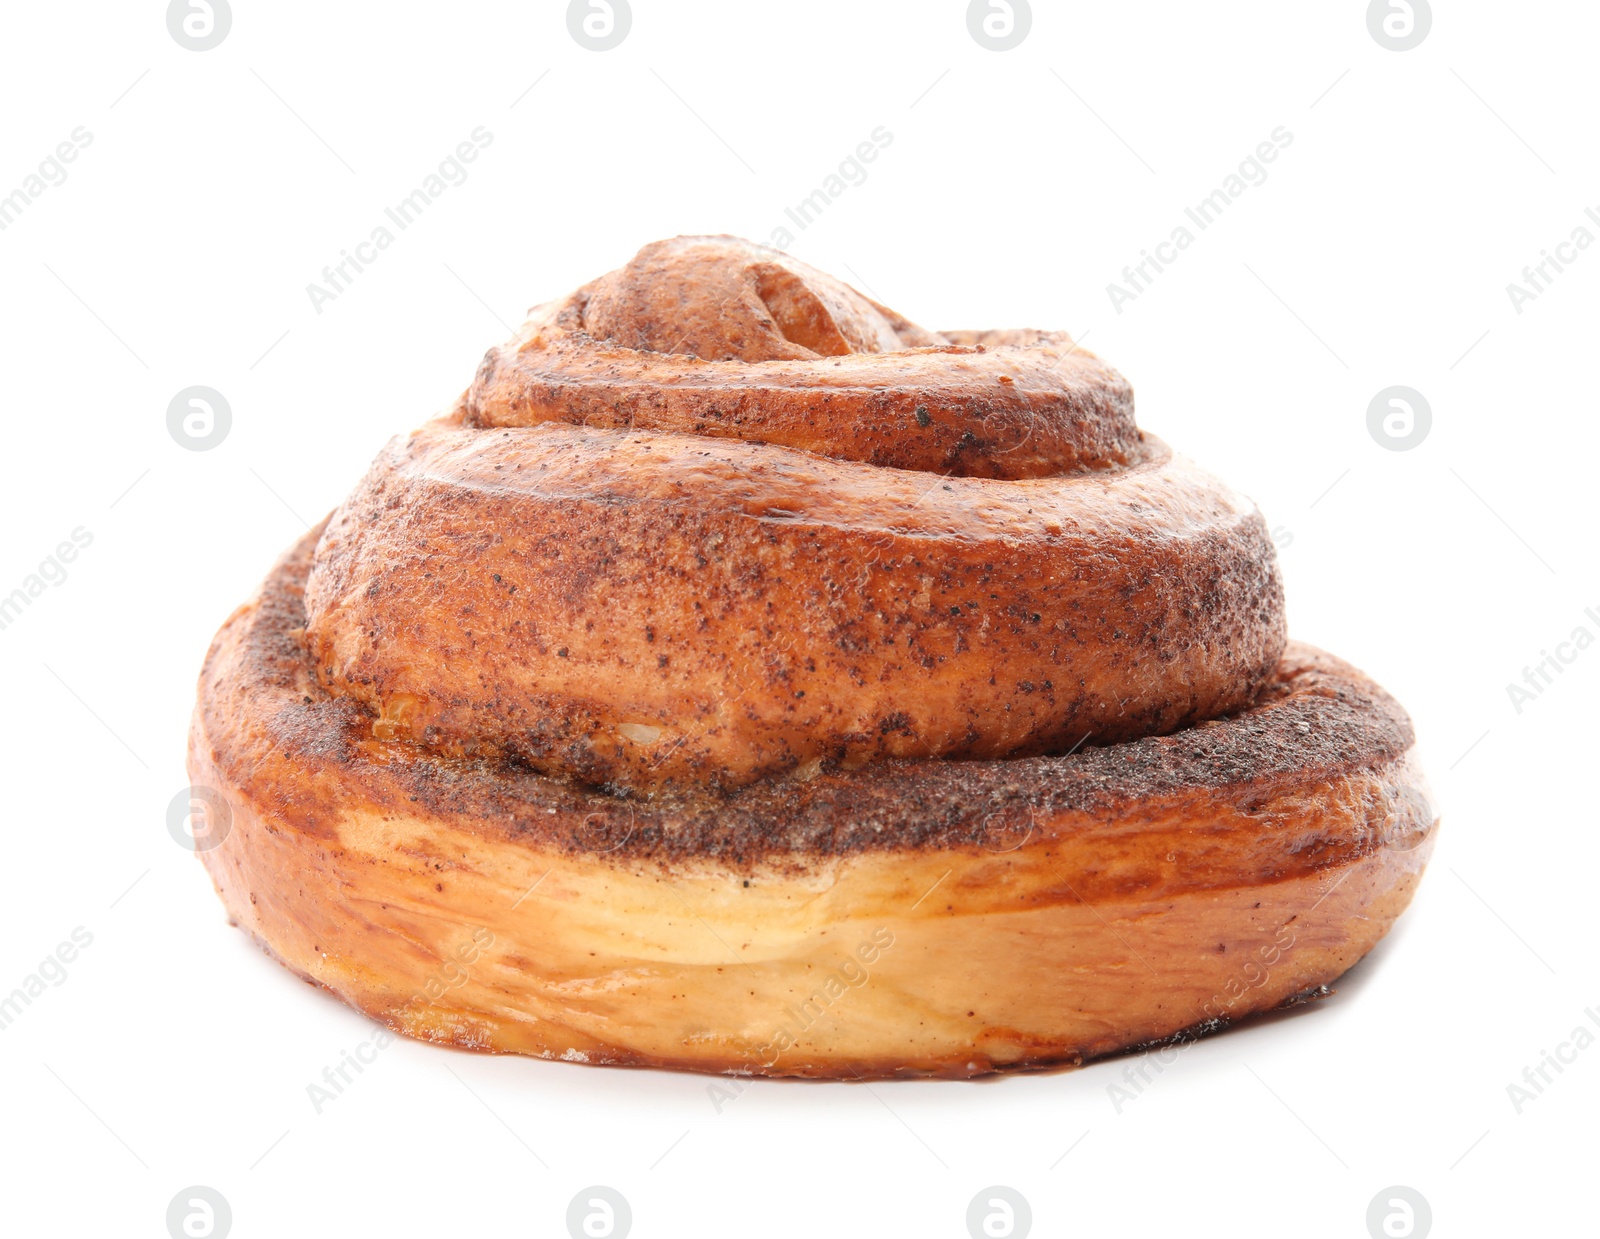 Photo of Freshly baked cinnamon roll on white background